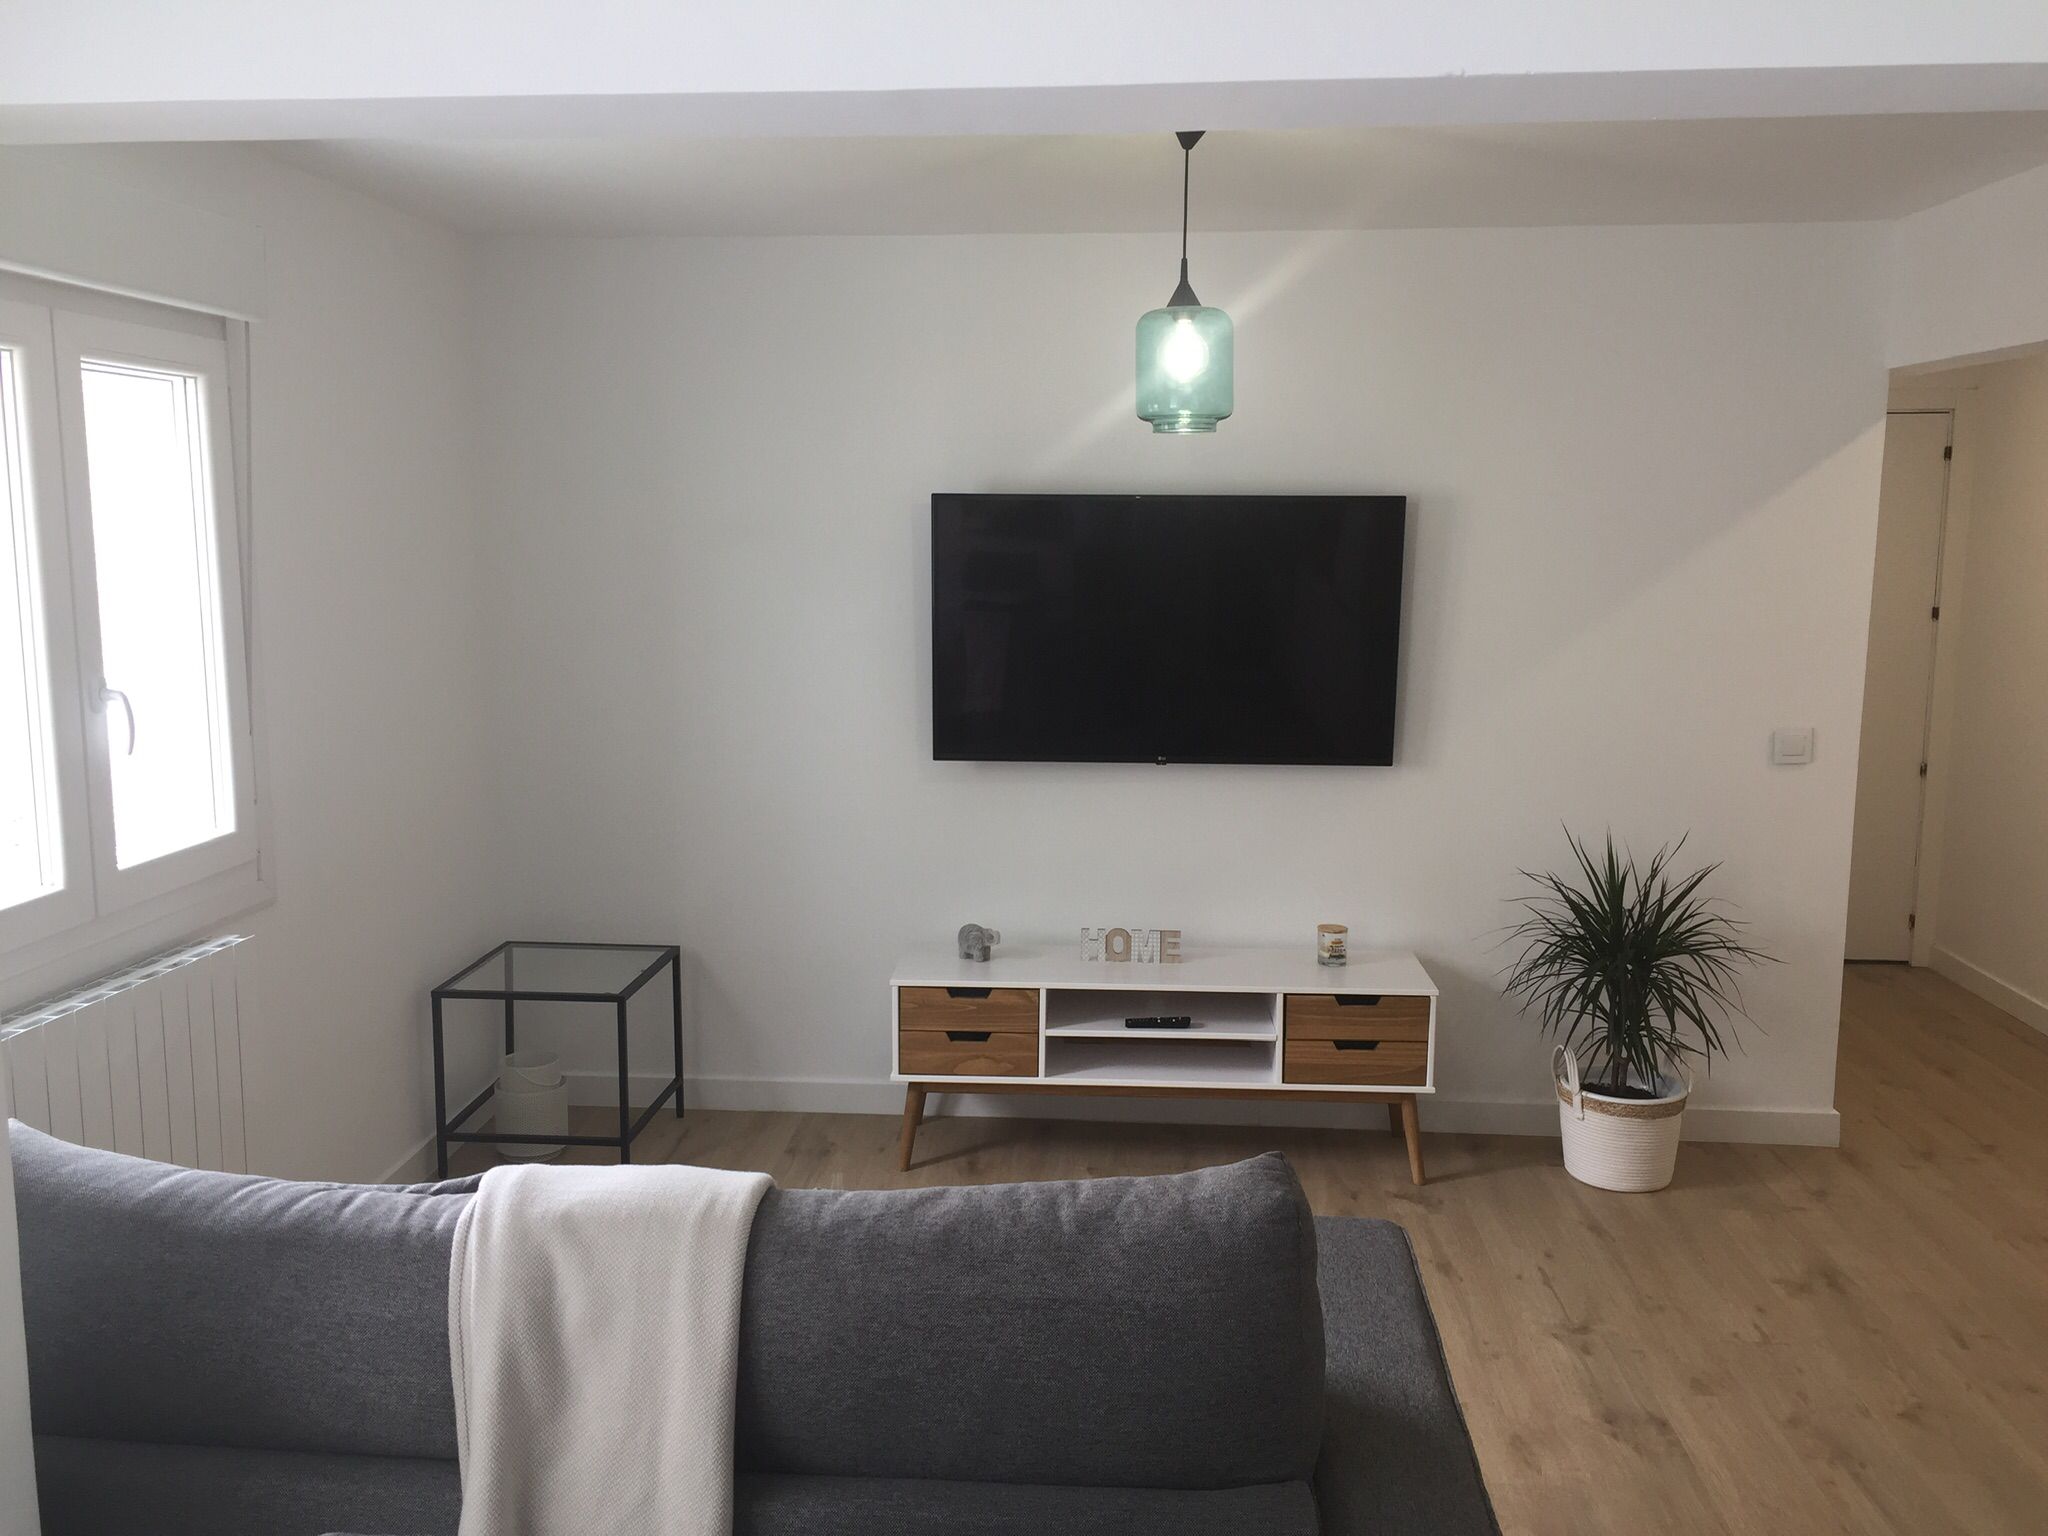 Kai Kresaltzu - Furnished apartment for rent in Bilbao